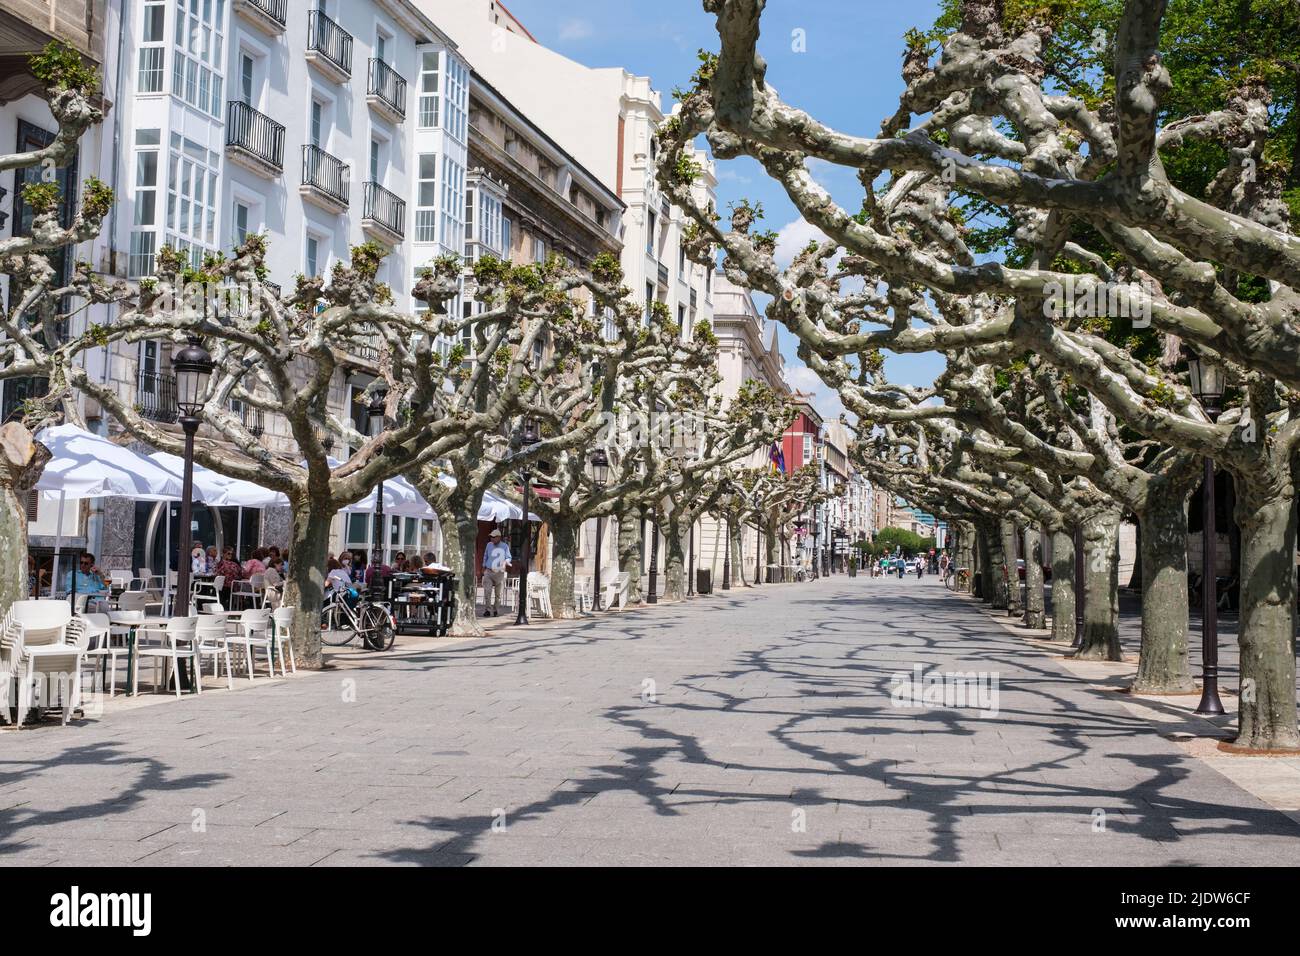 Spain, Burgos. London Planetrees, Platanus x acerifolia. Stock Photo